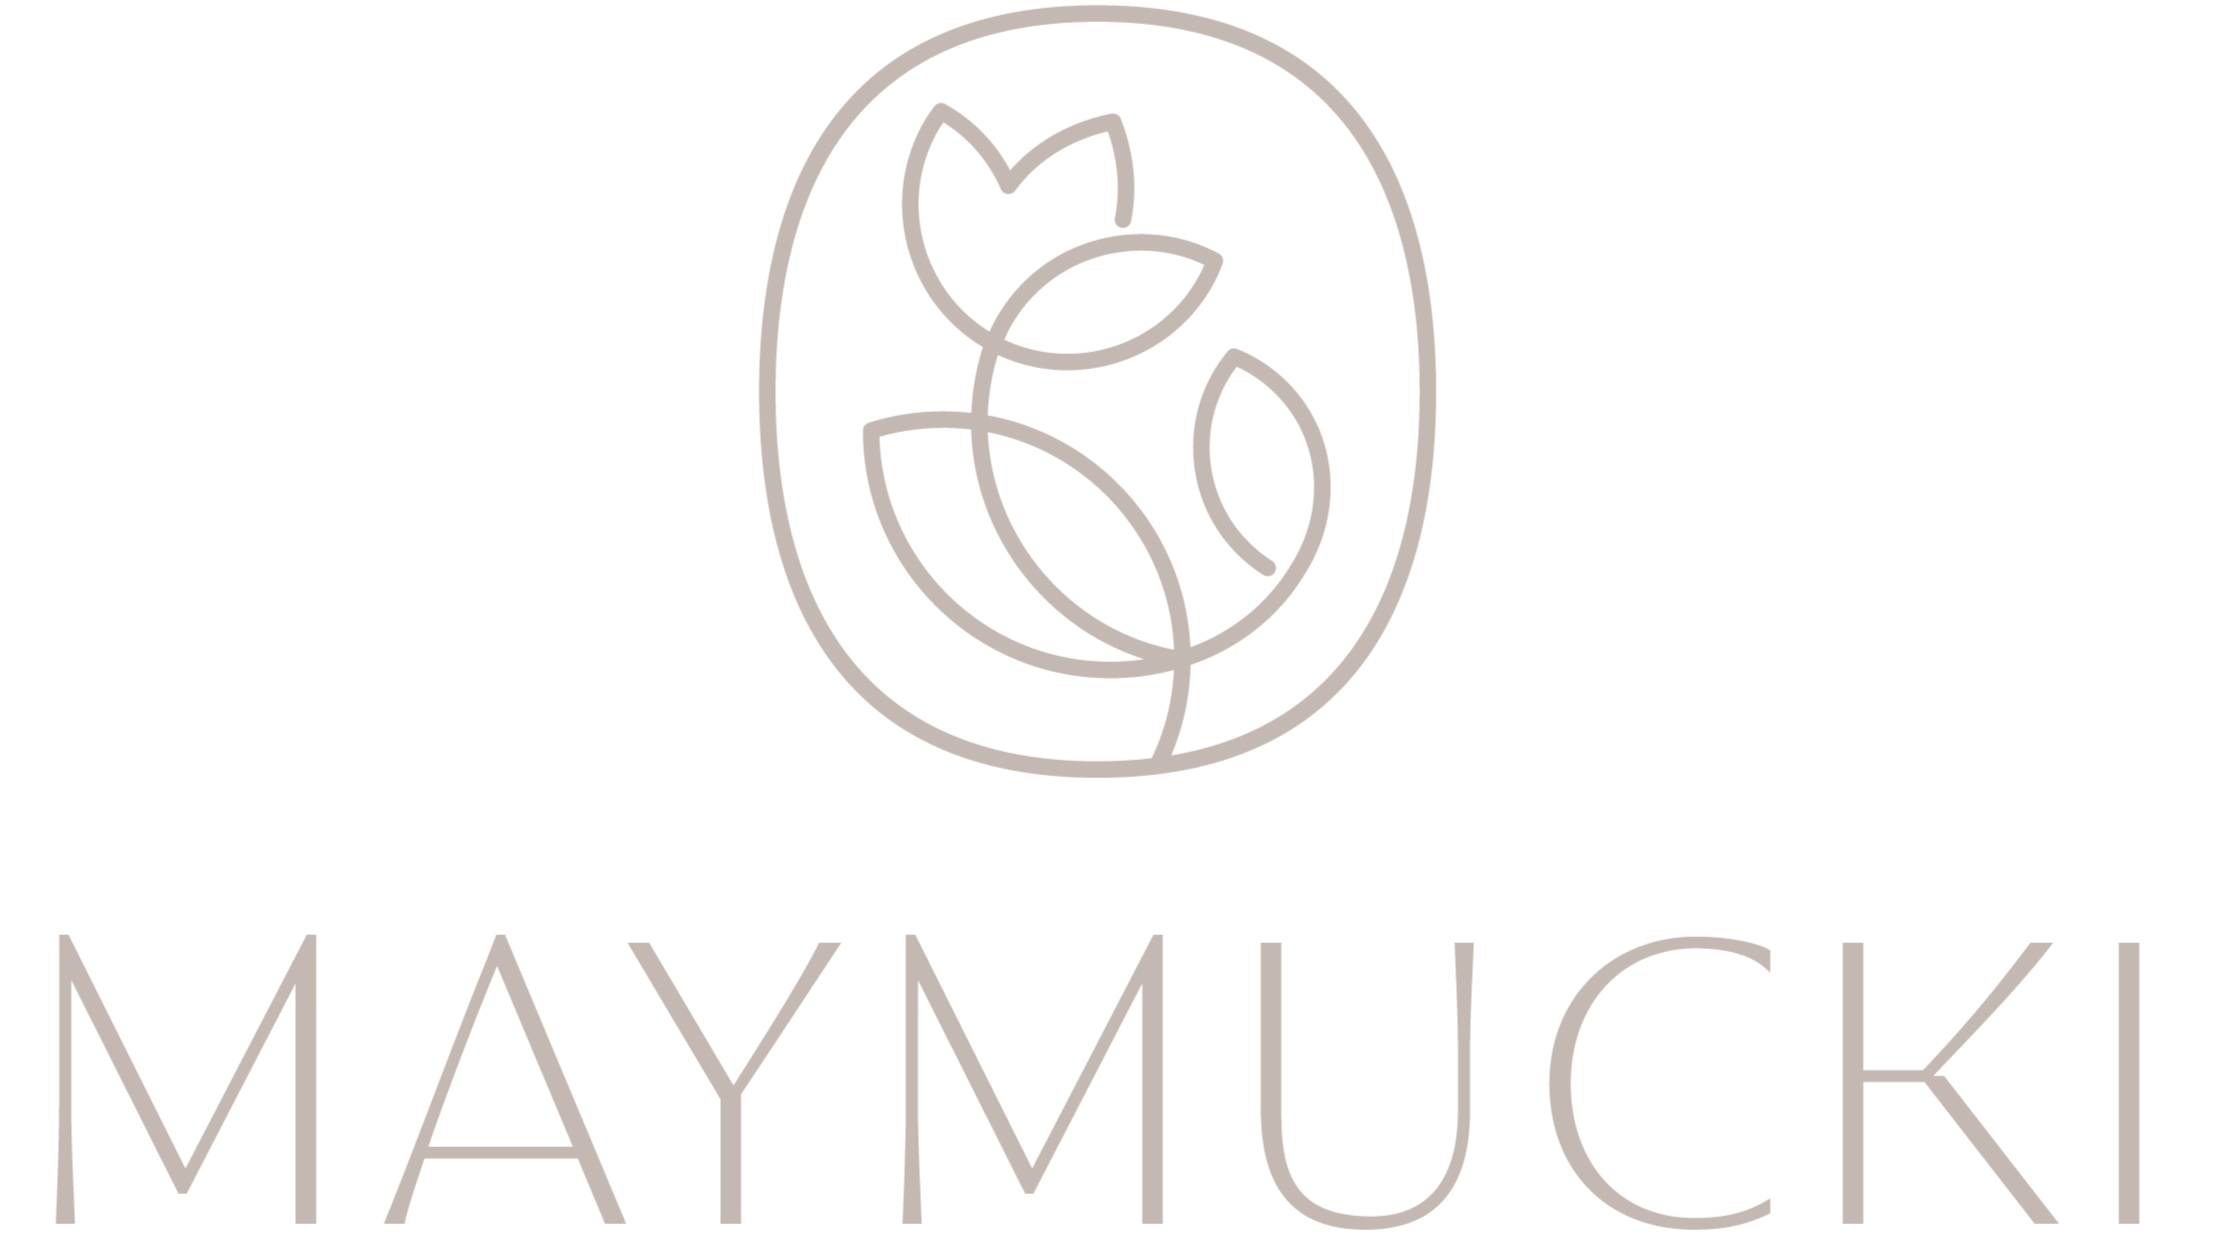 MAYMUCKI logo